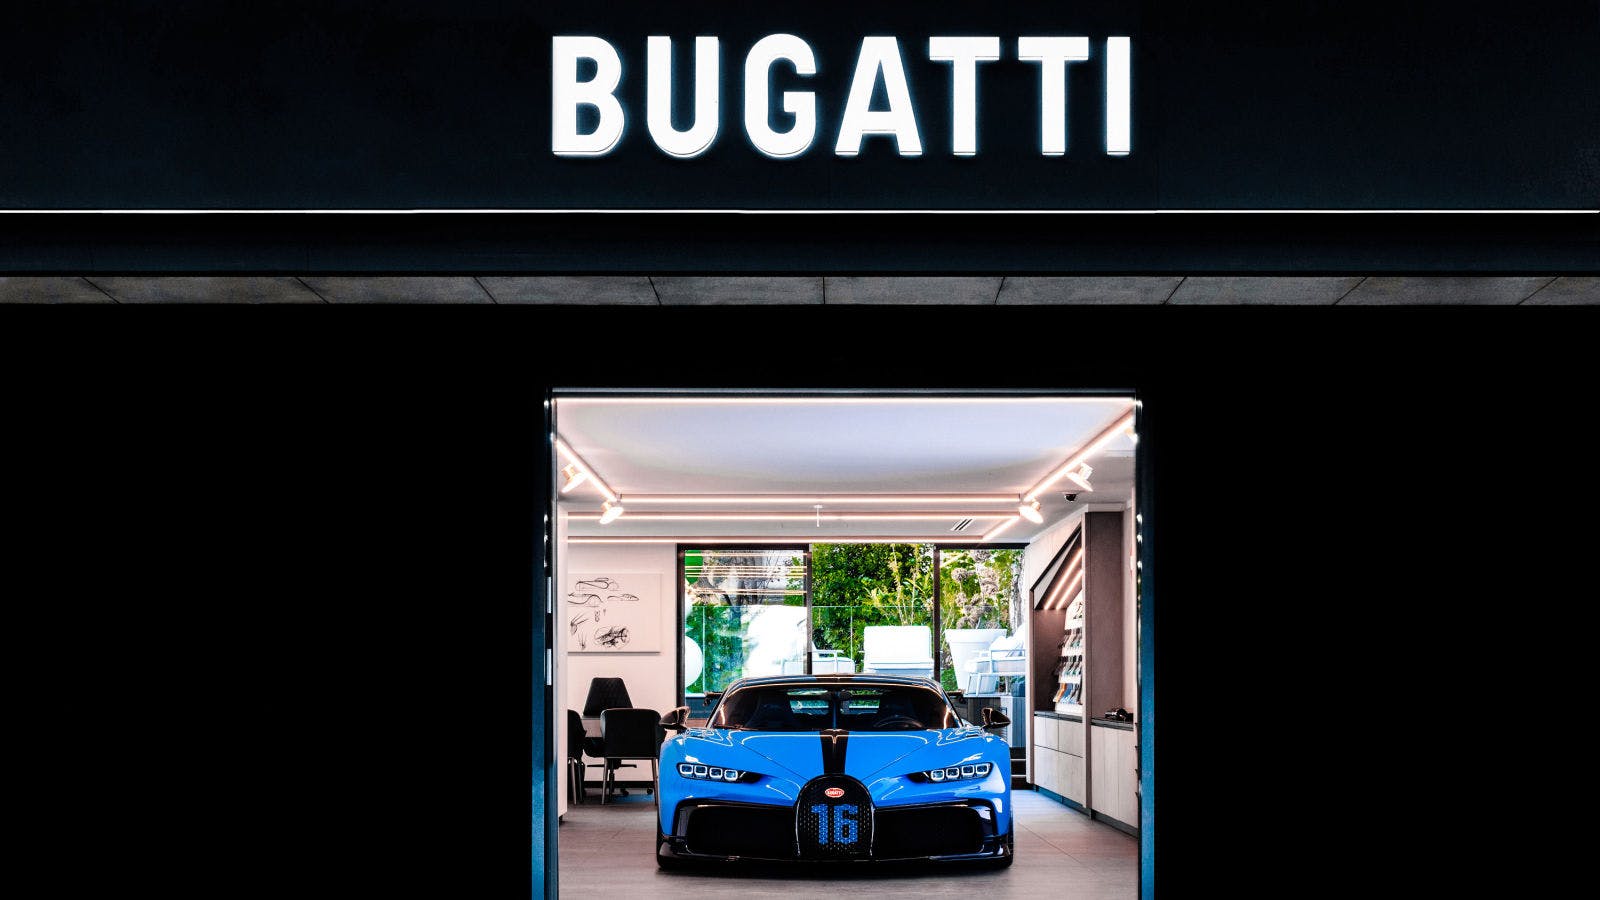 Bugatti’s new corporate look and feel at Bugatti’s dealer partners.